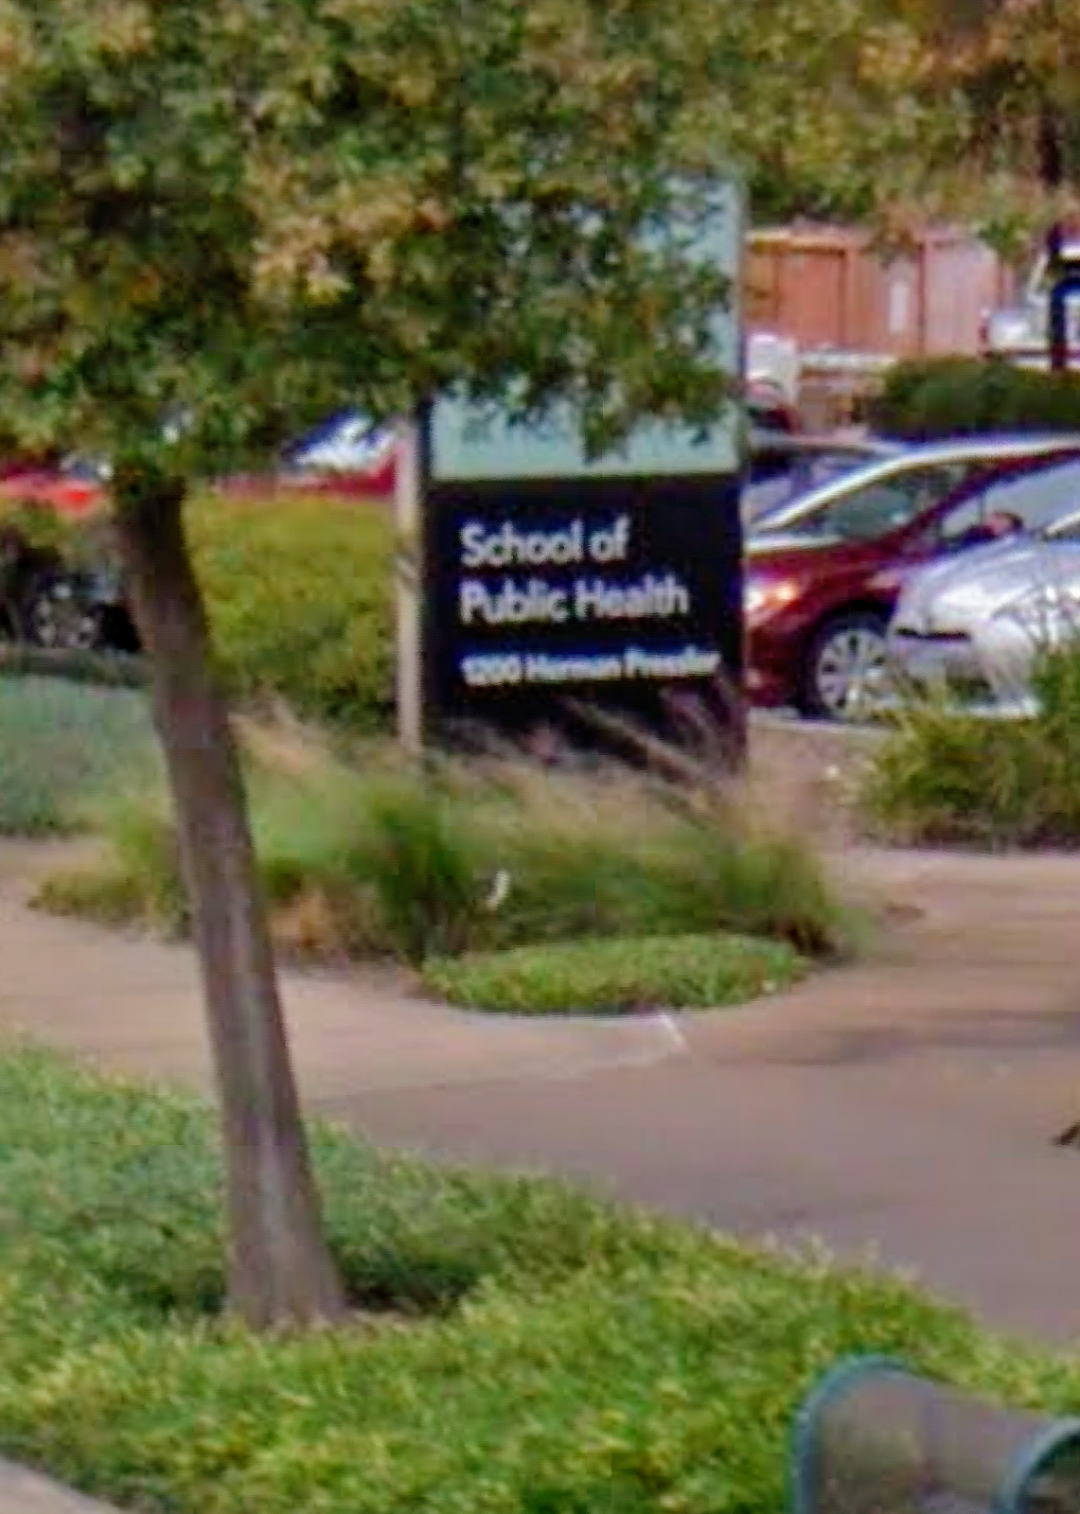 The University of Texas School of Public Health in Dallas